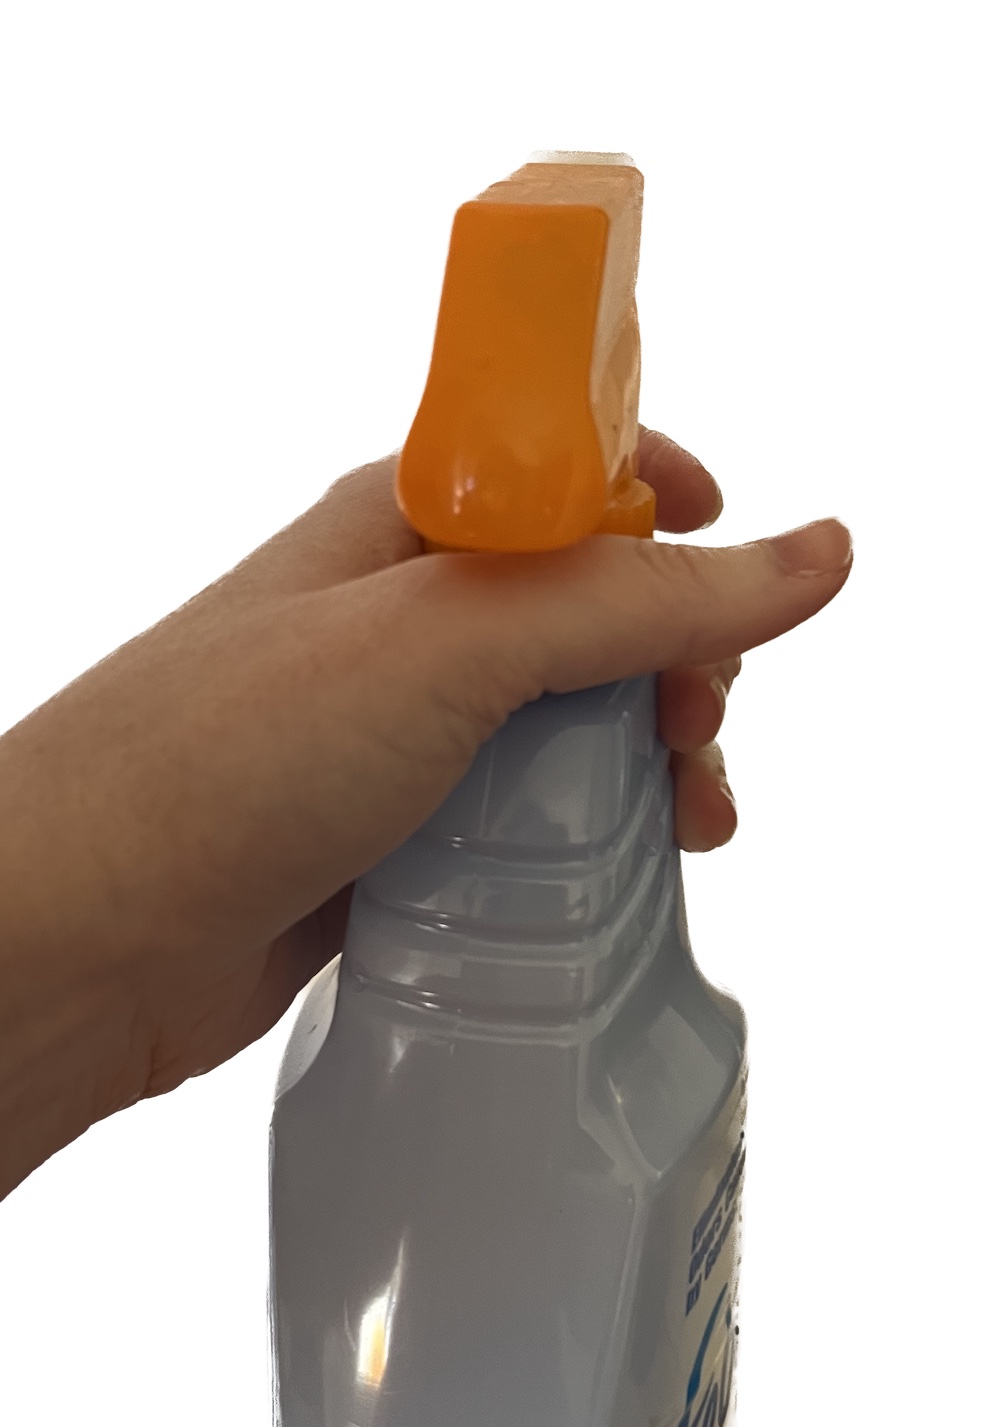 https://www.ourdailycraft.com/wp-content/uploads/2023/02/spray-bottle.jpg